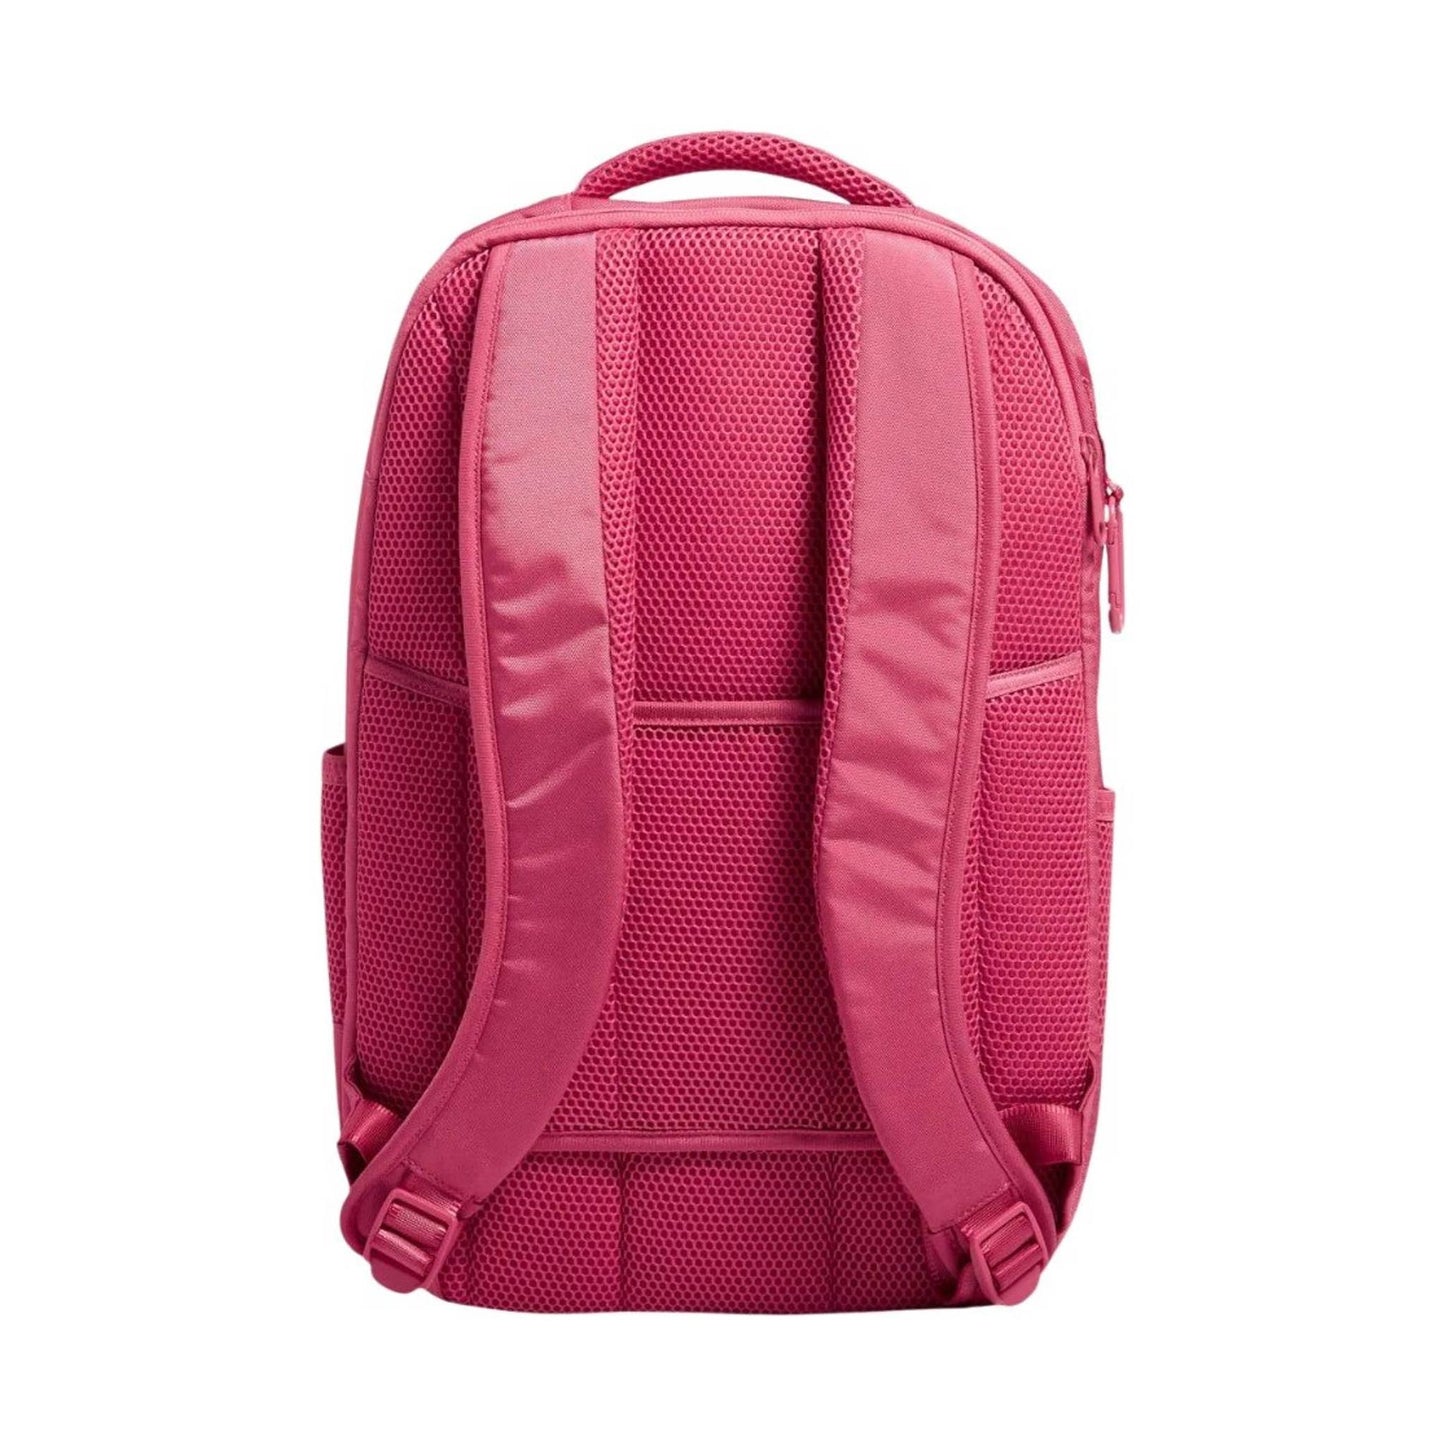 Vera Bradley Reactive Grand Backpack - Raspberry Sorbet